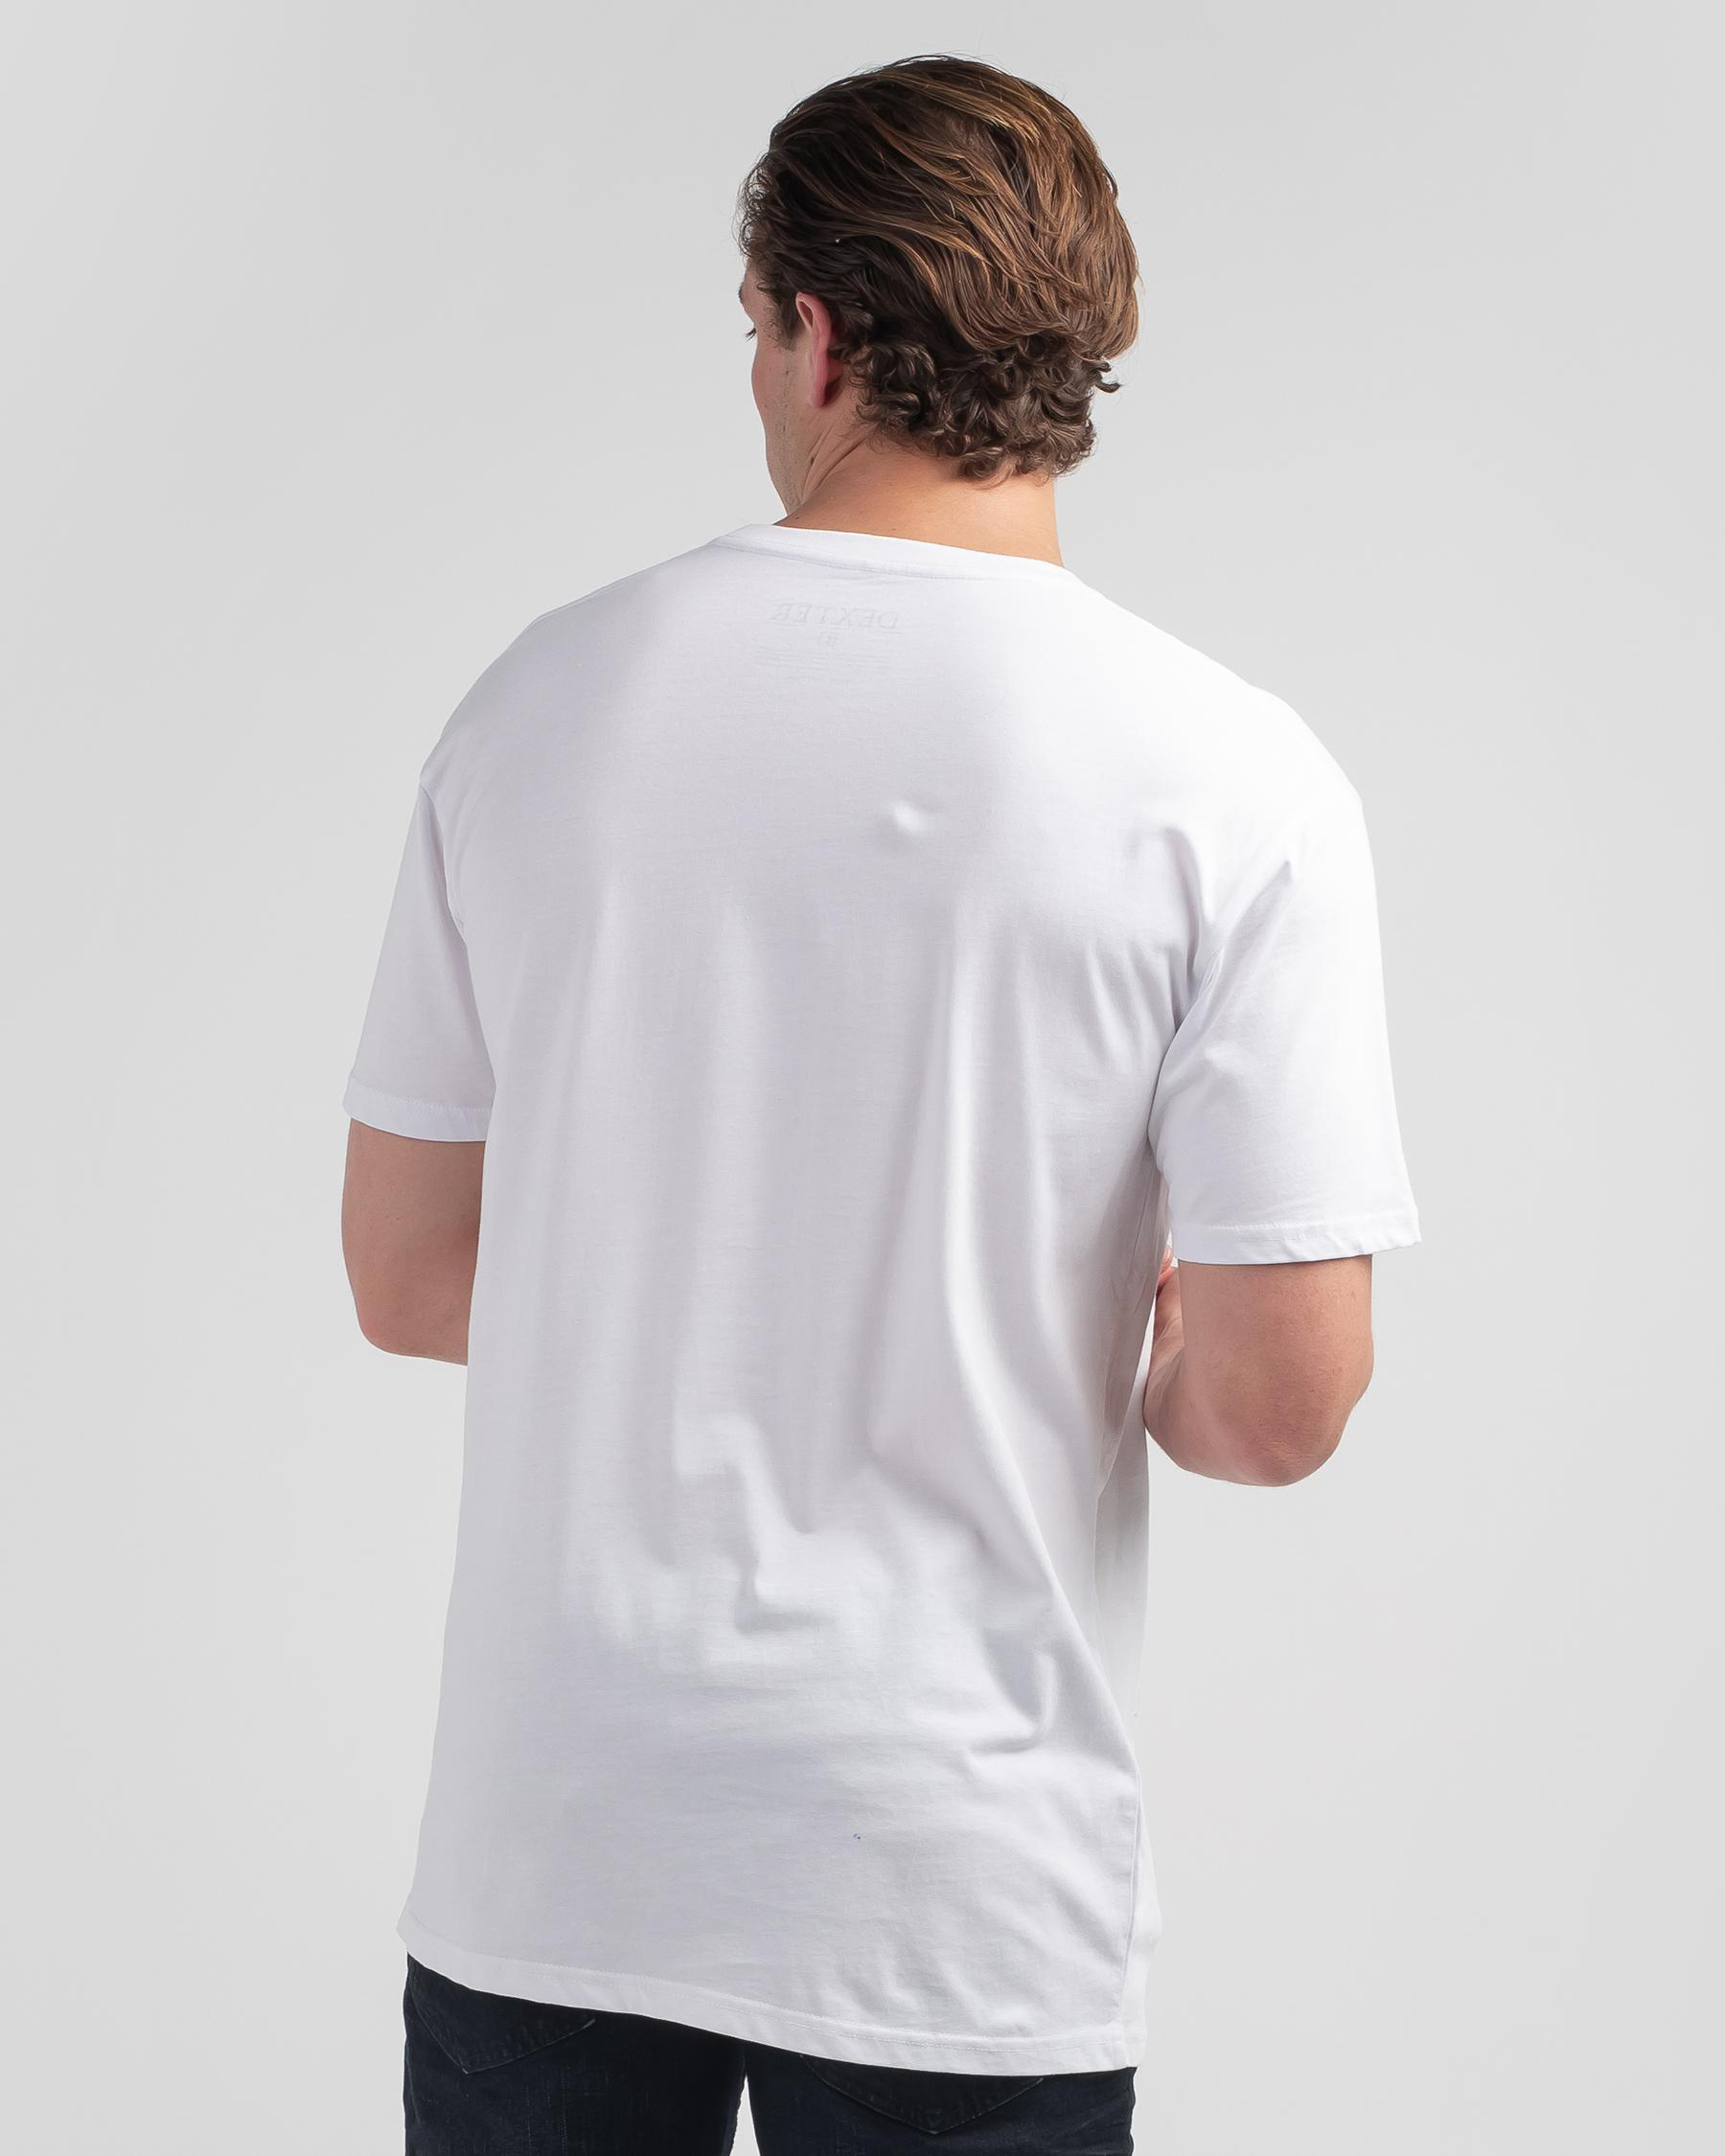 Dexter Cavallo T-Shirt In White - Fast Shipping & Easy Returns - City ...